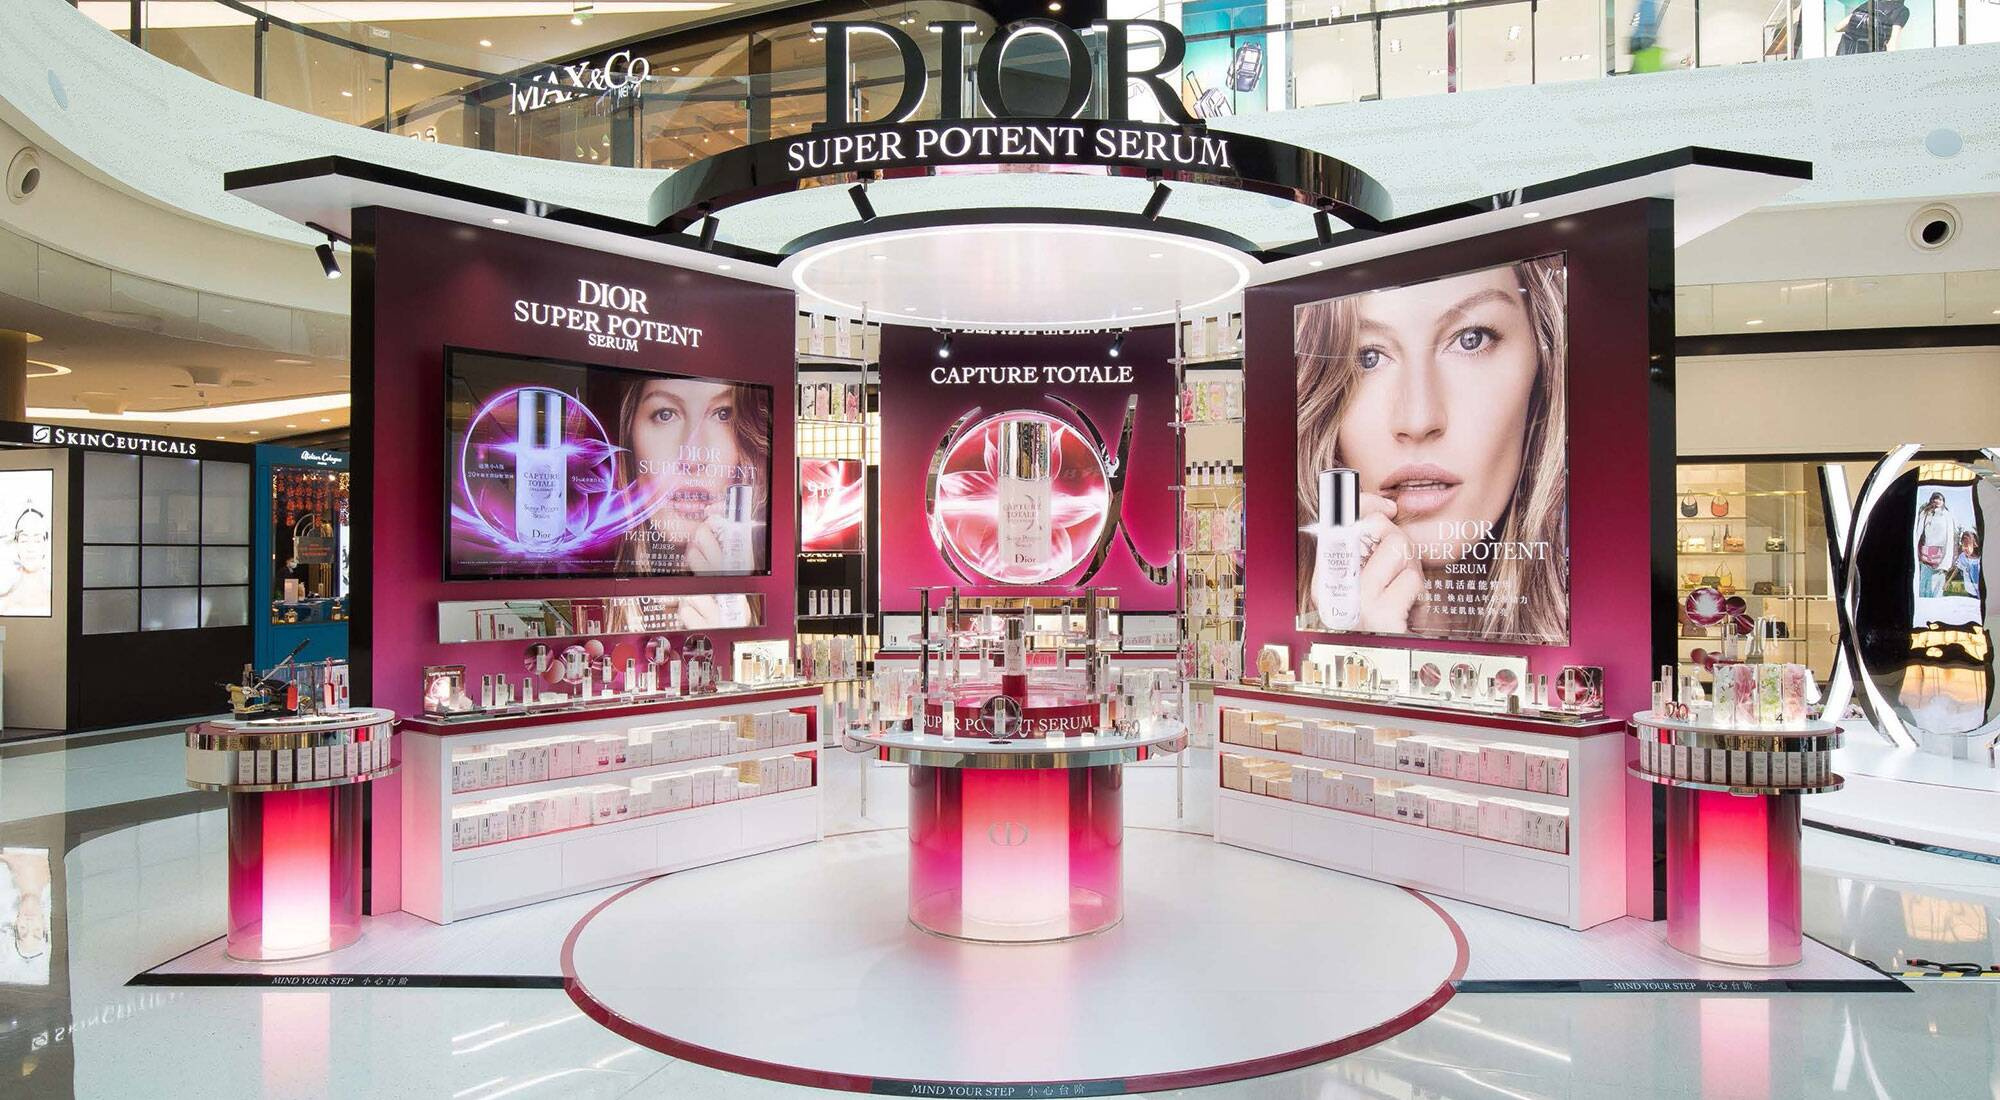 Dior pop-up store